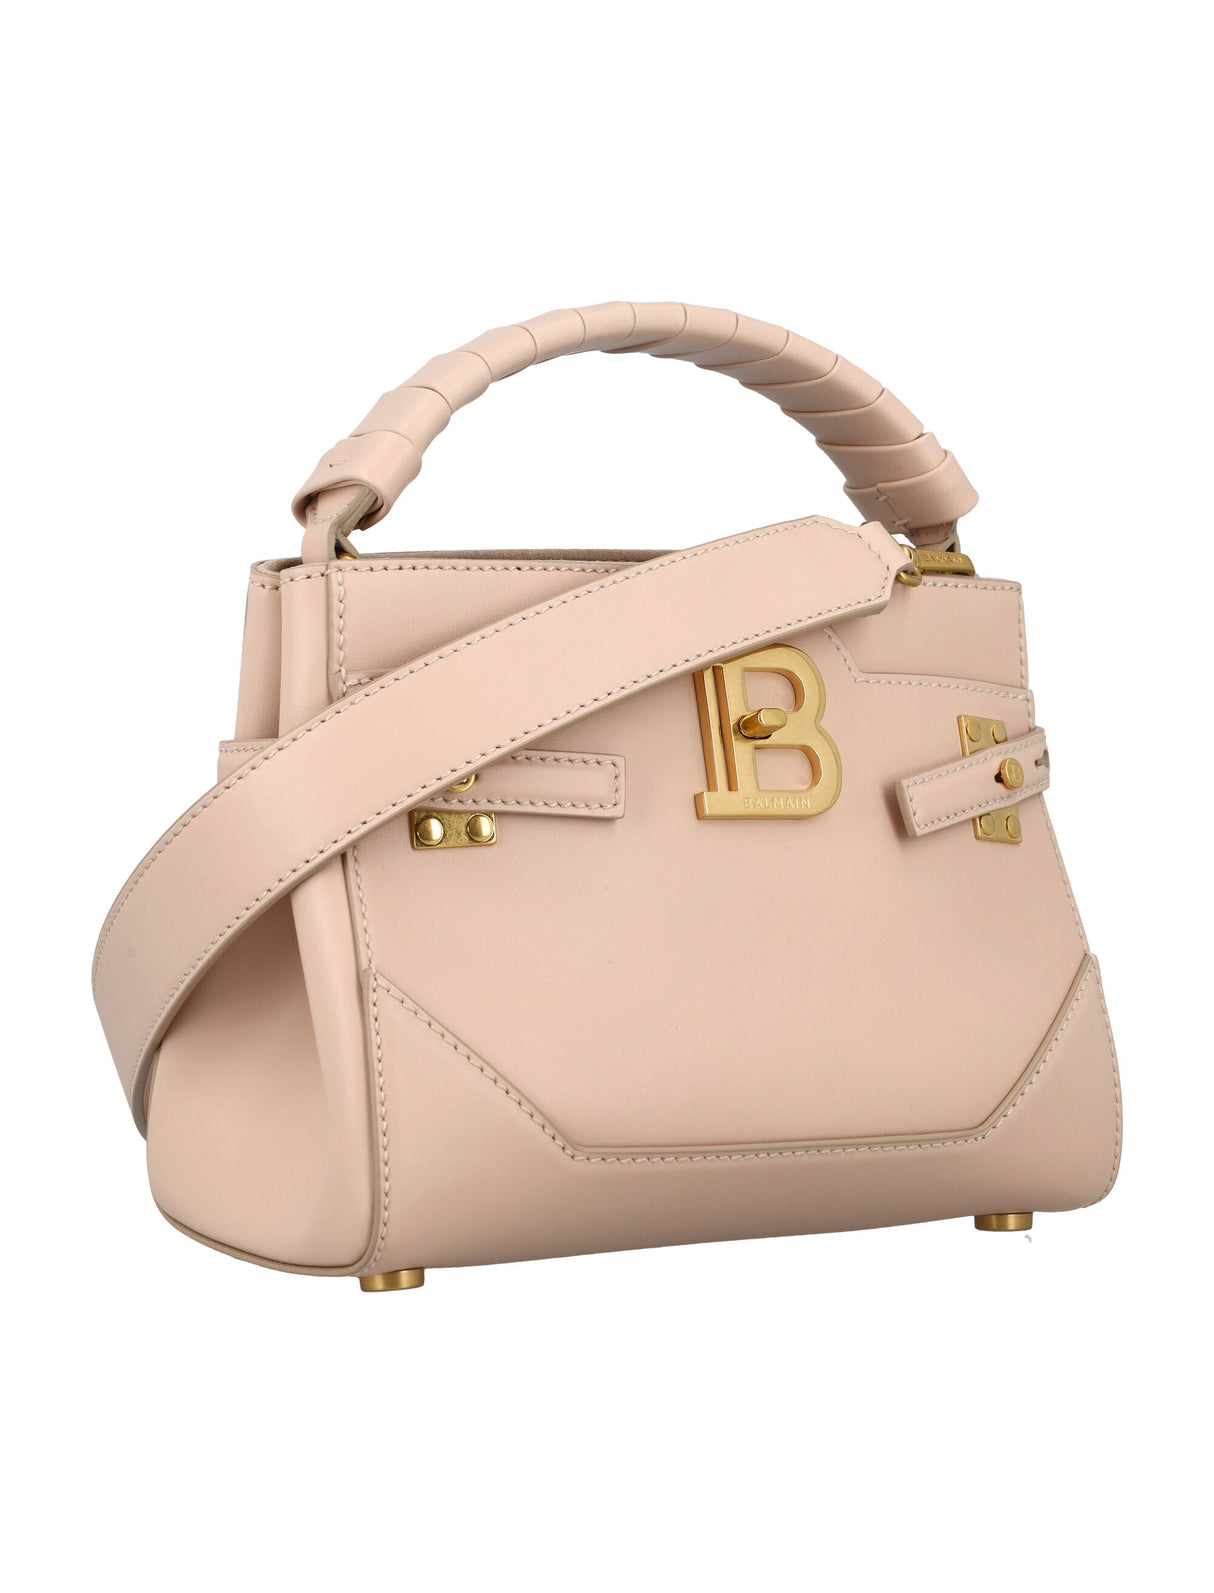 B-Buzz 22 Handbag for Women in Nude